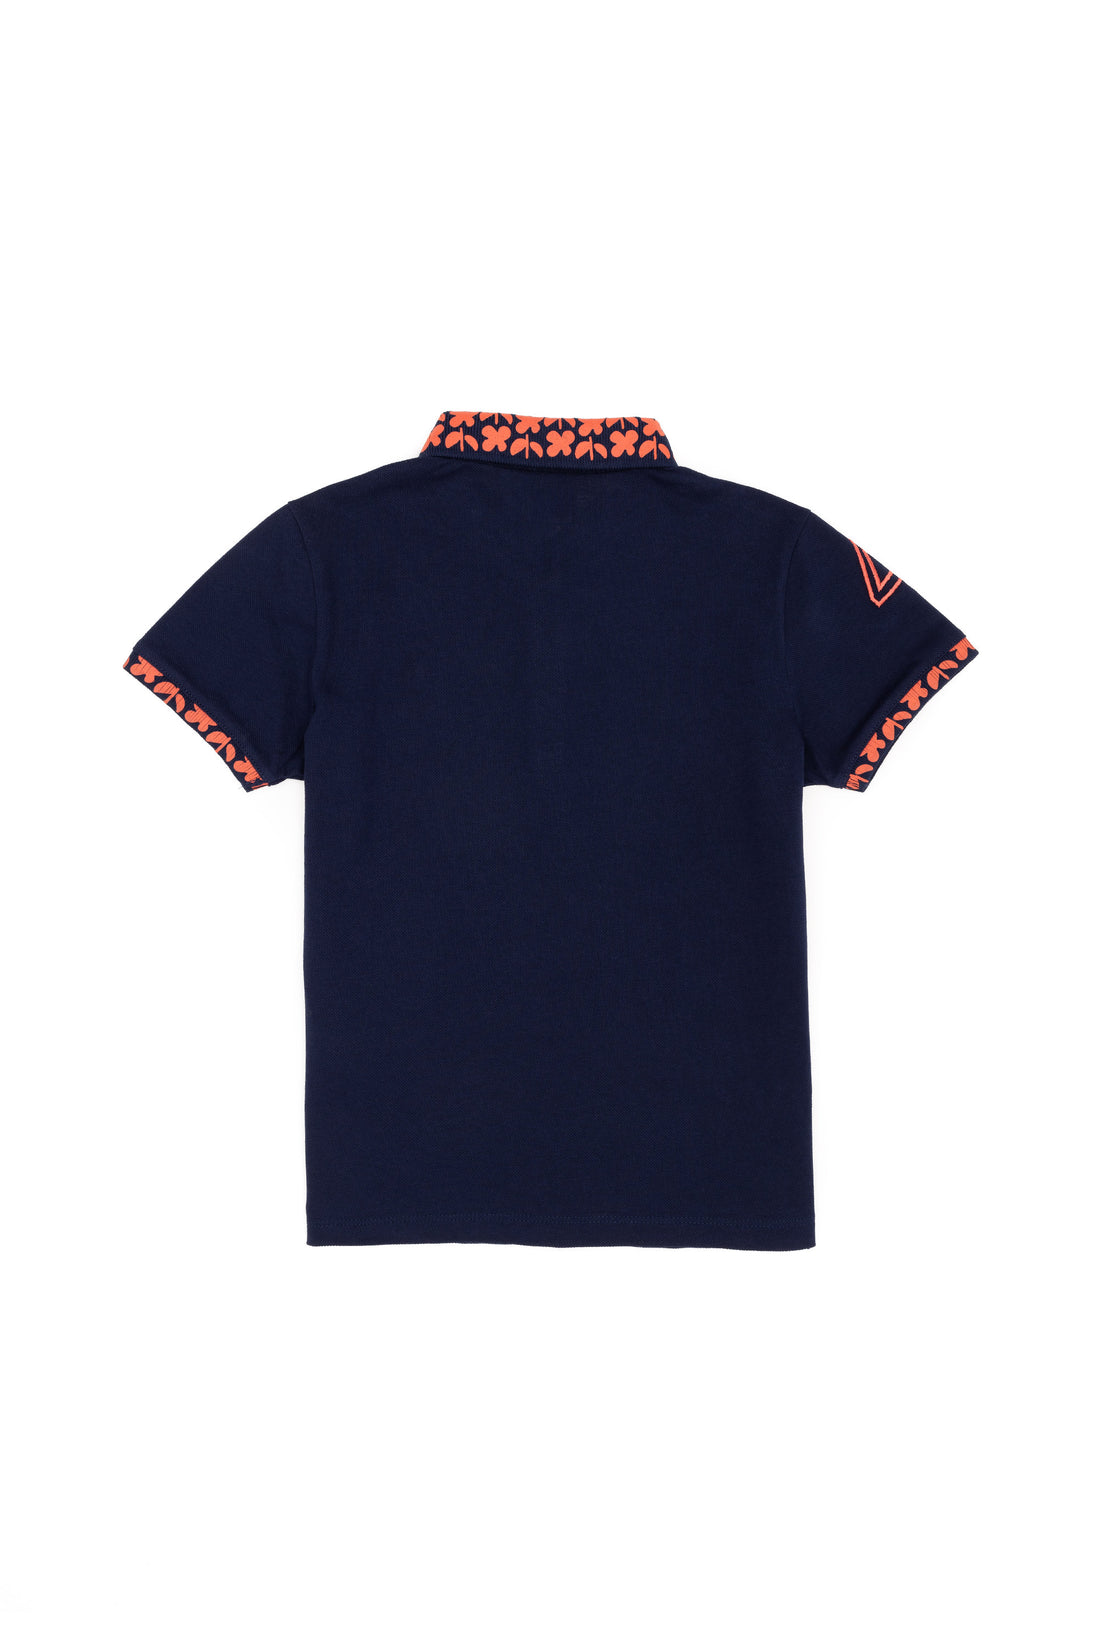 Polo Shirt With Design_G084SZ0110 1834405_VR033_02